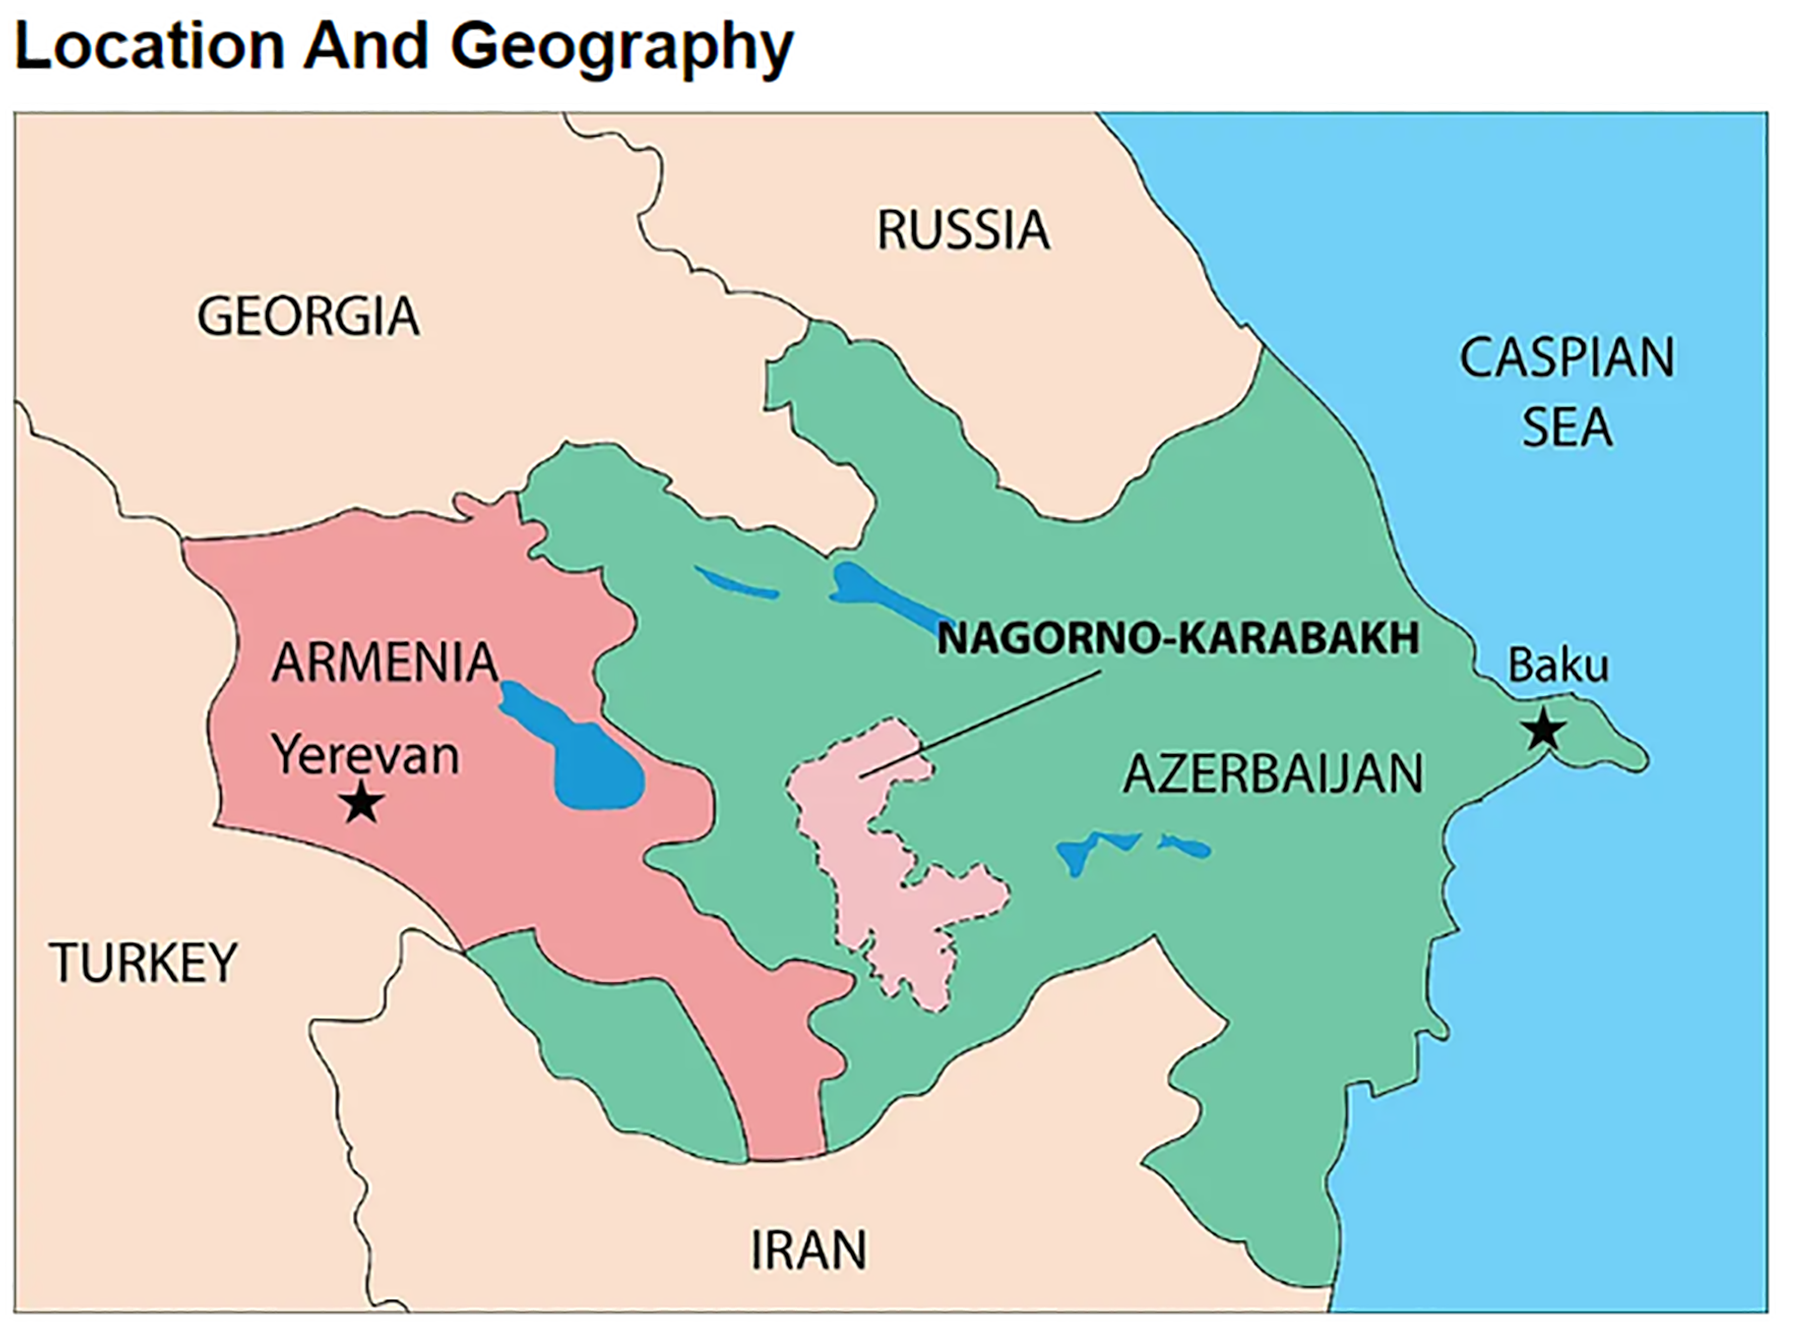 Armenia and Azerbaijan